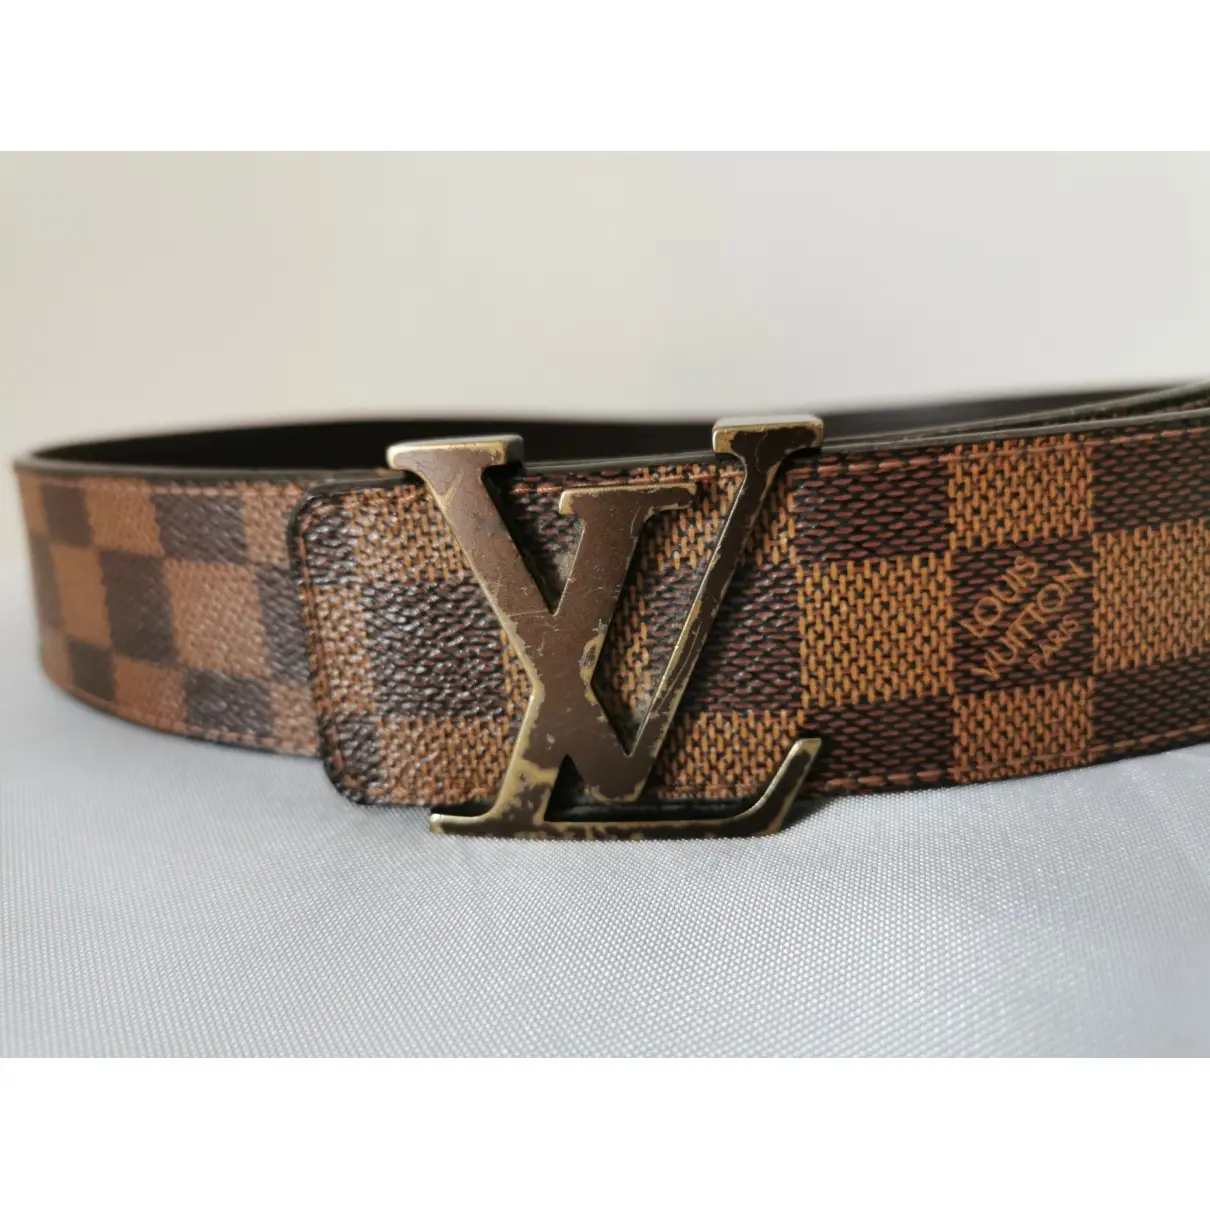 Buy Louis Vuitton Initiales cloth belt online